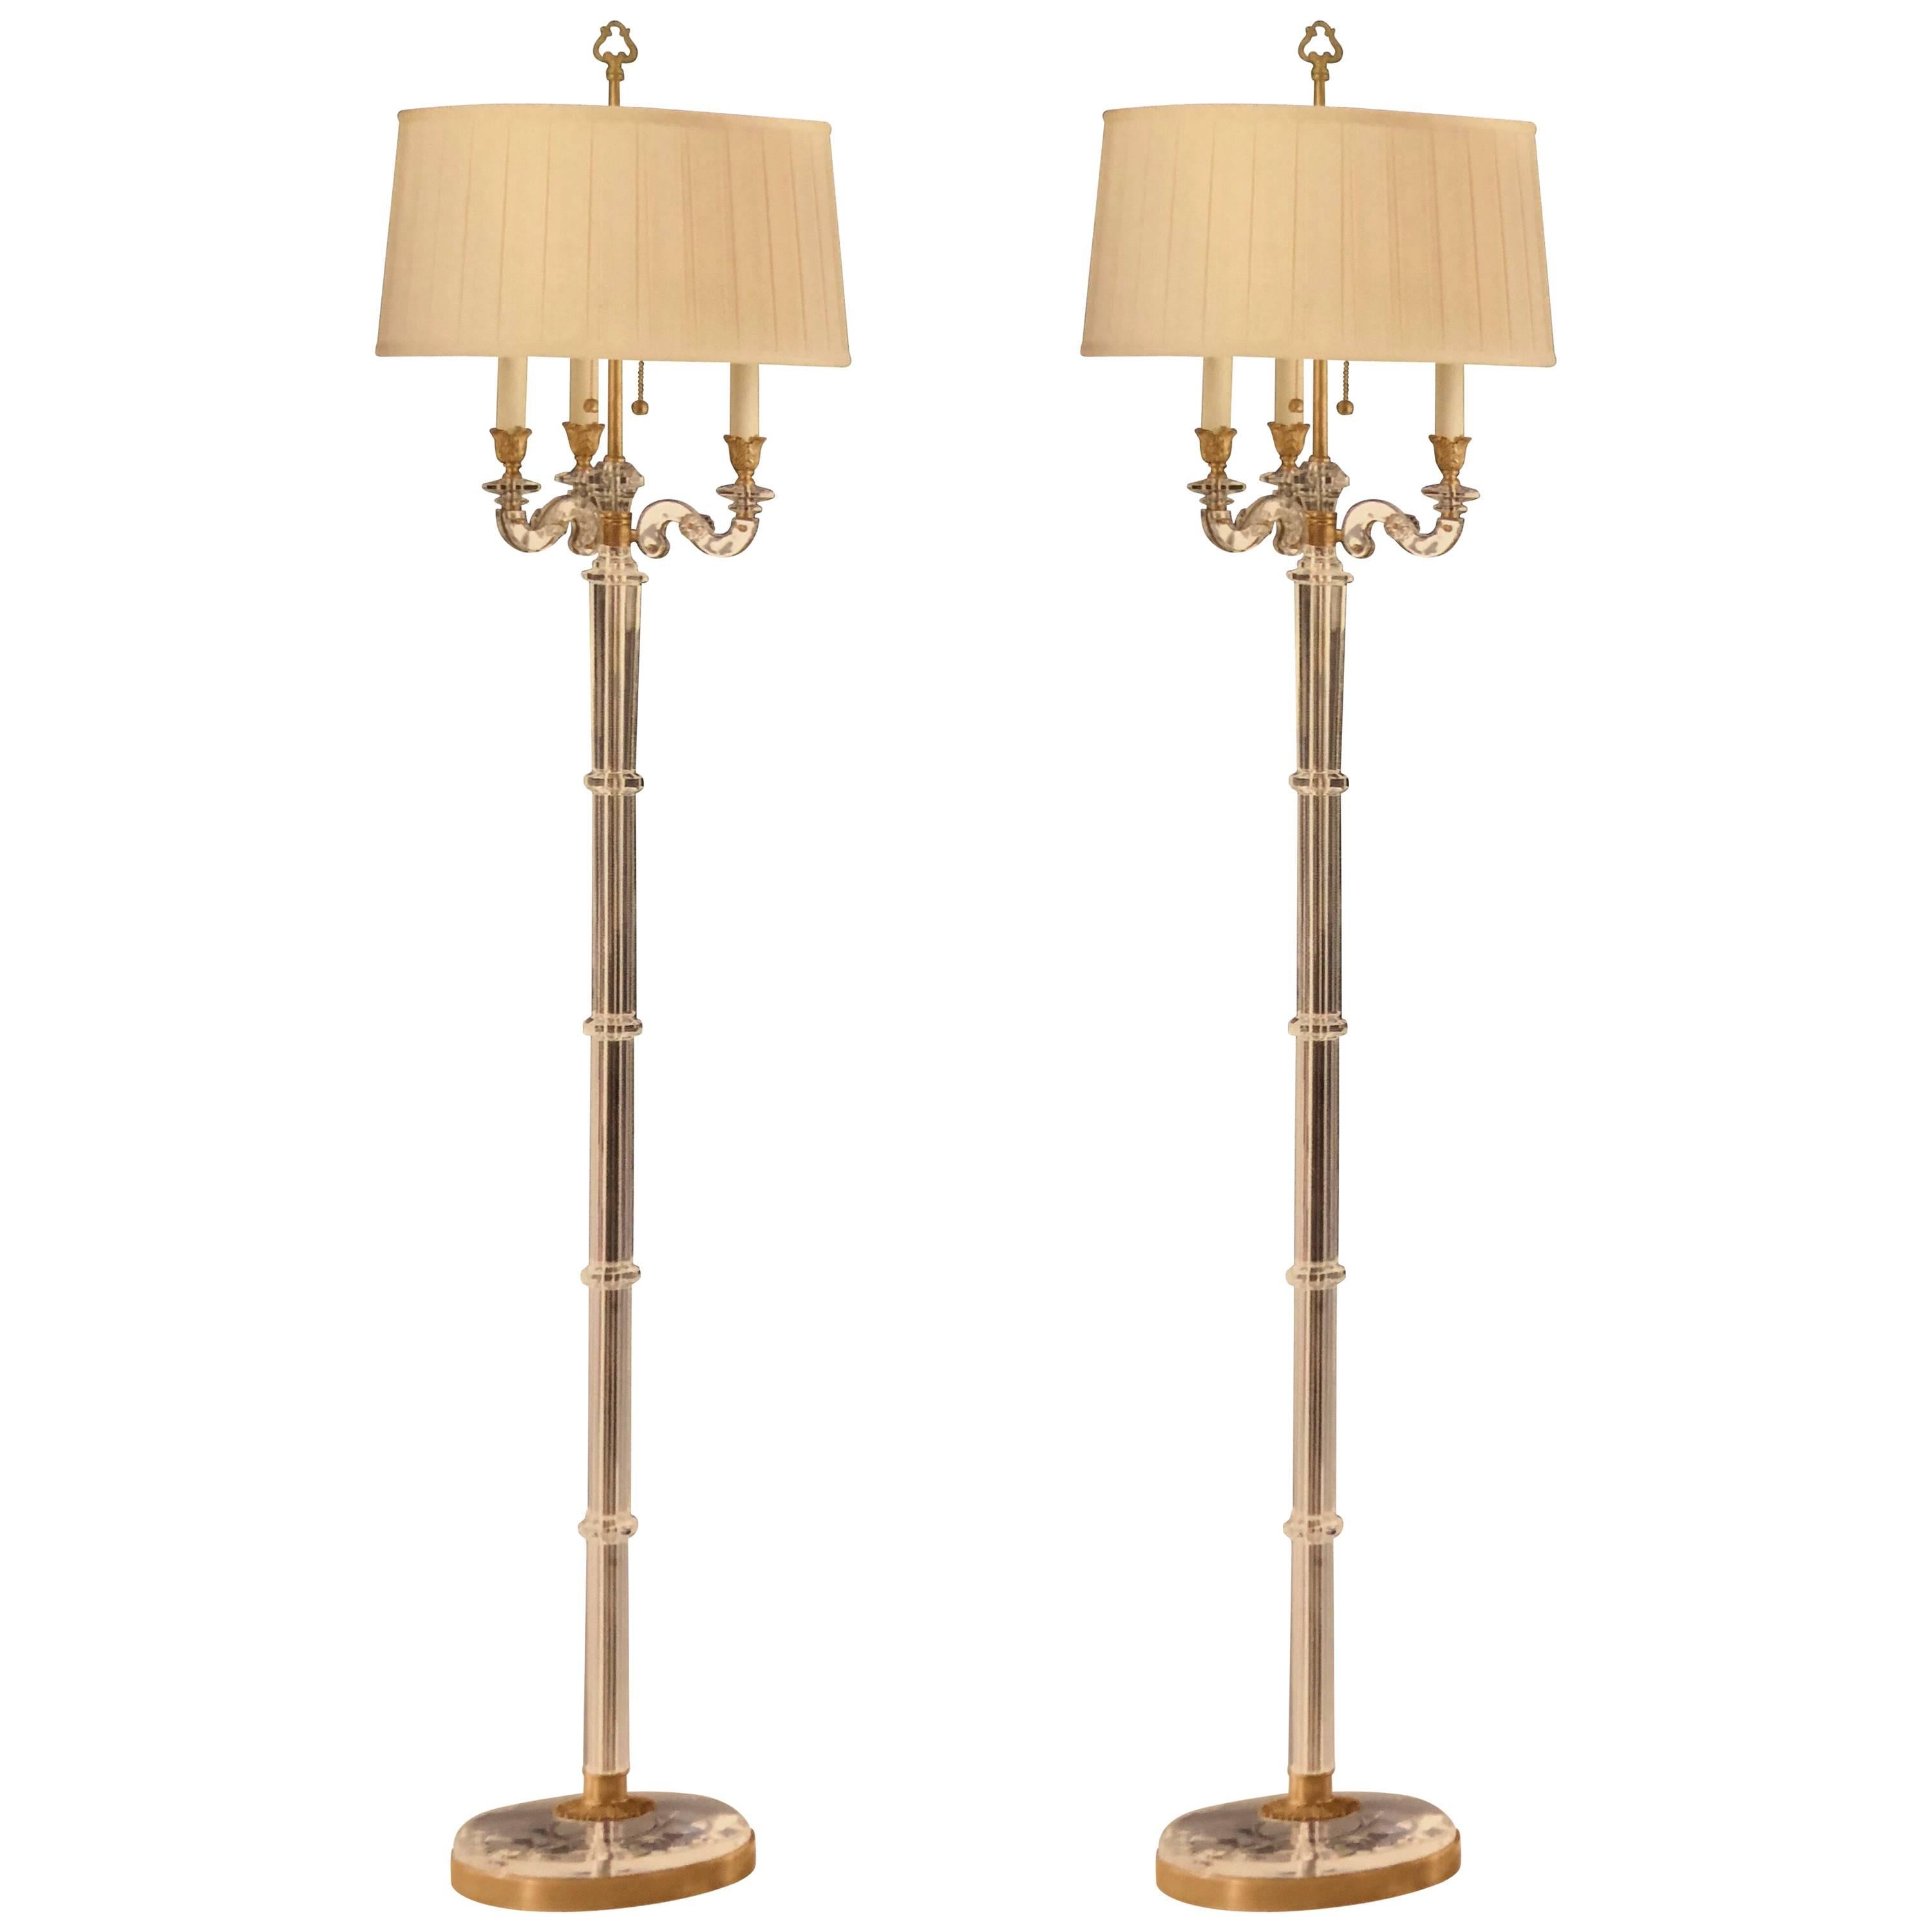 Italian Modern Neoclassical Style Crystal & Brass Floor Lamp, Maison Baguès Pair For Sale